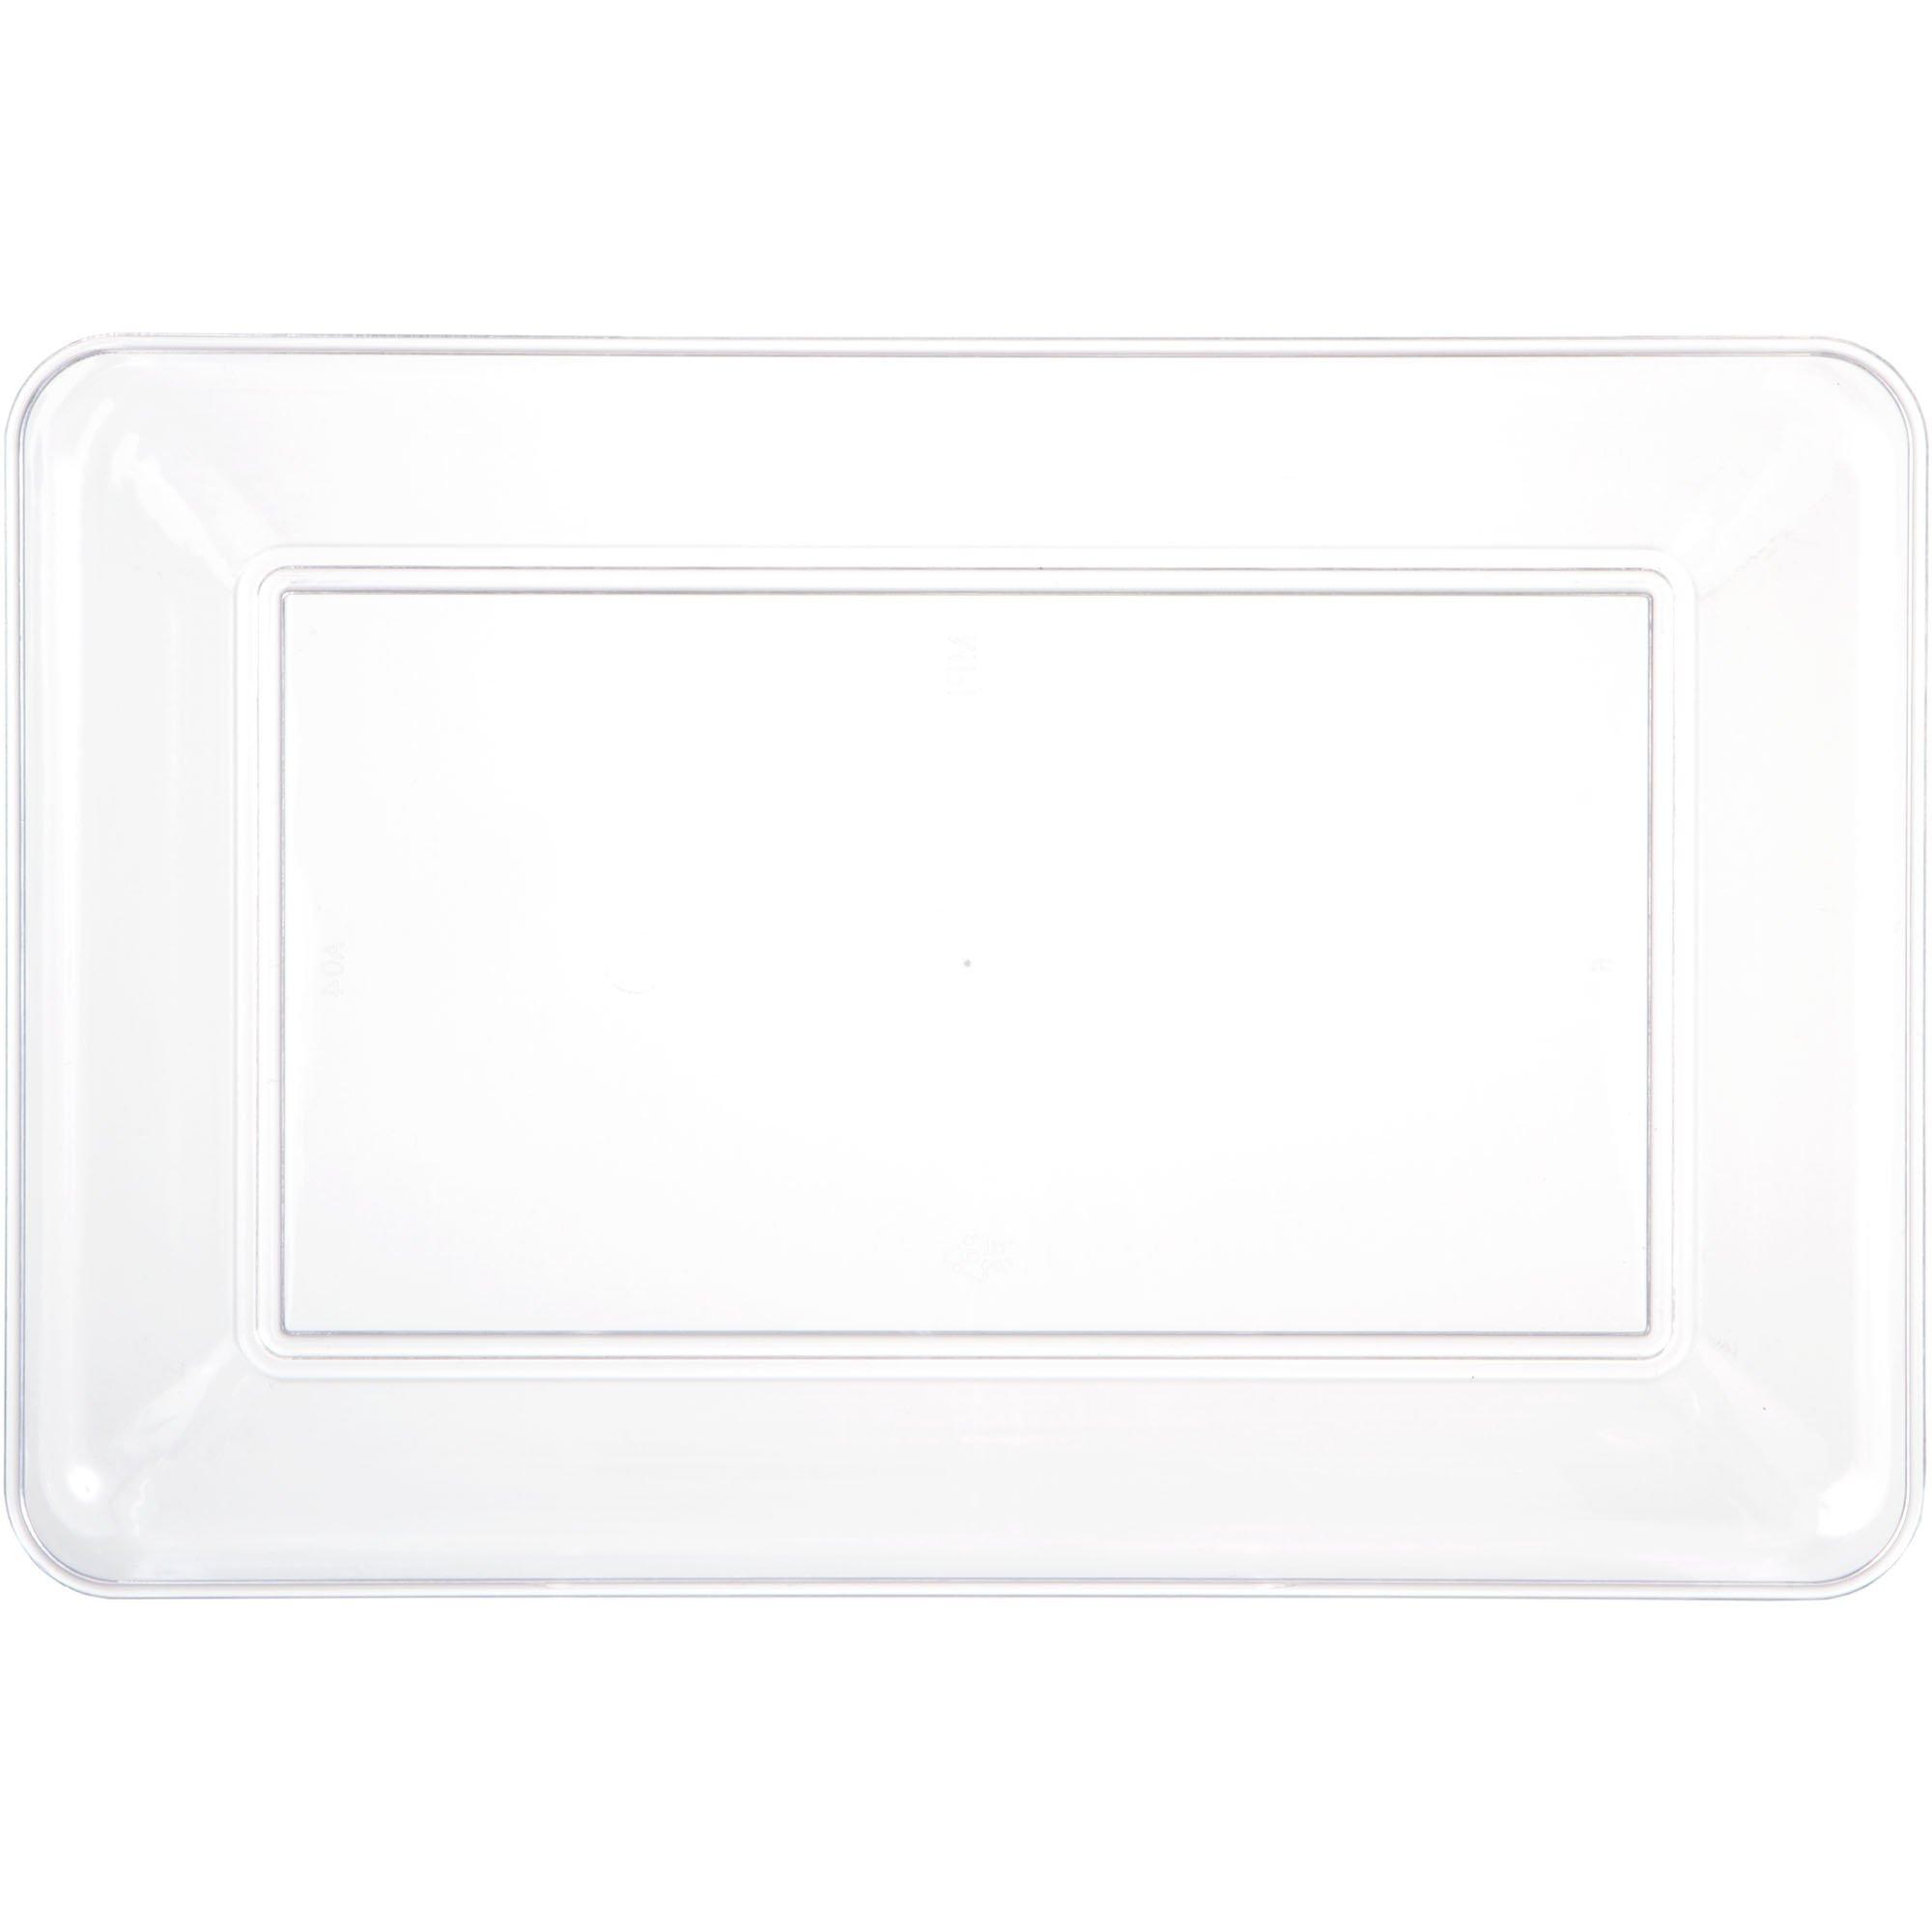 Plastic Rectangular Platter, 11in x 18in